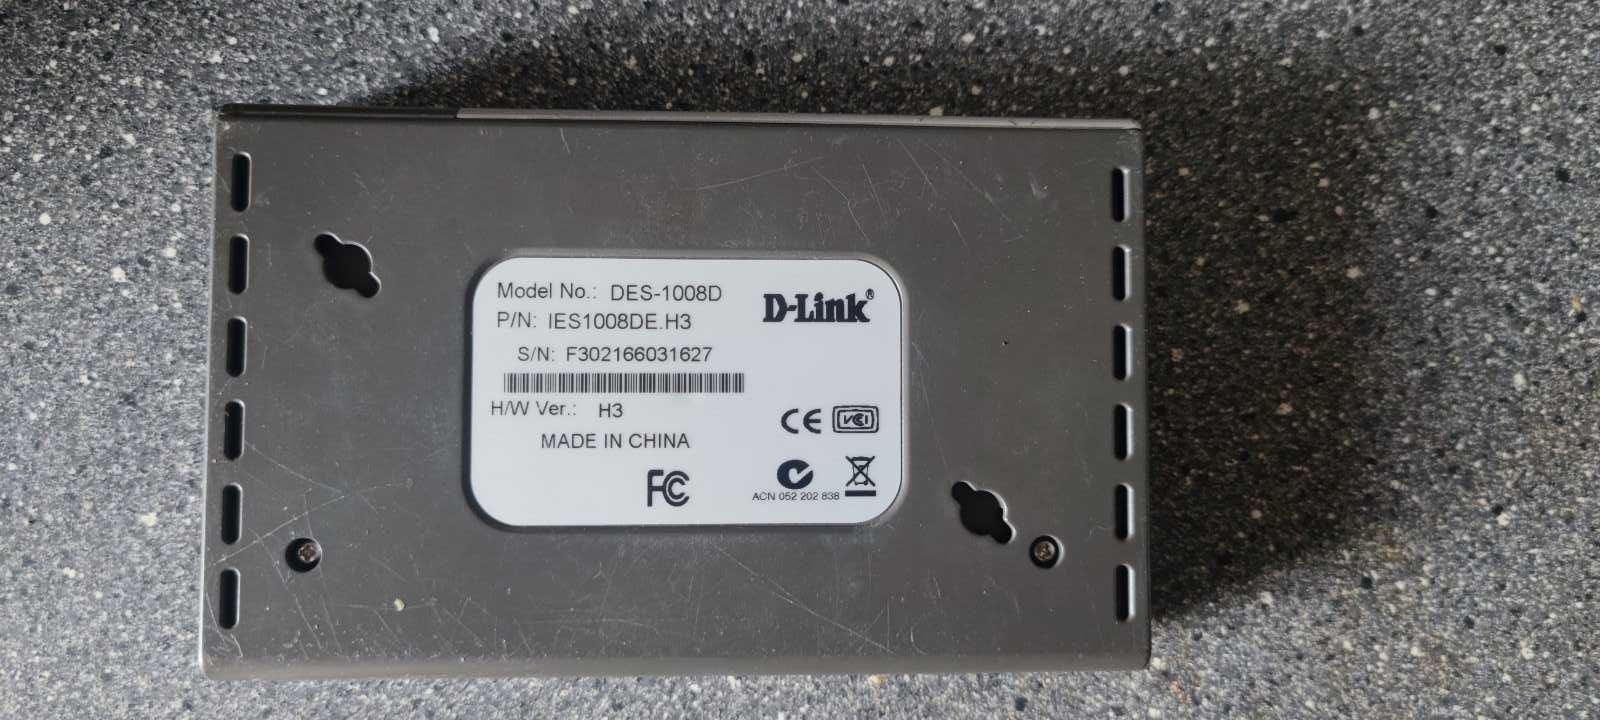 Хаб, cвіч (Switch) - D-Link DES-1008D 10/100 м/біт сек.